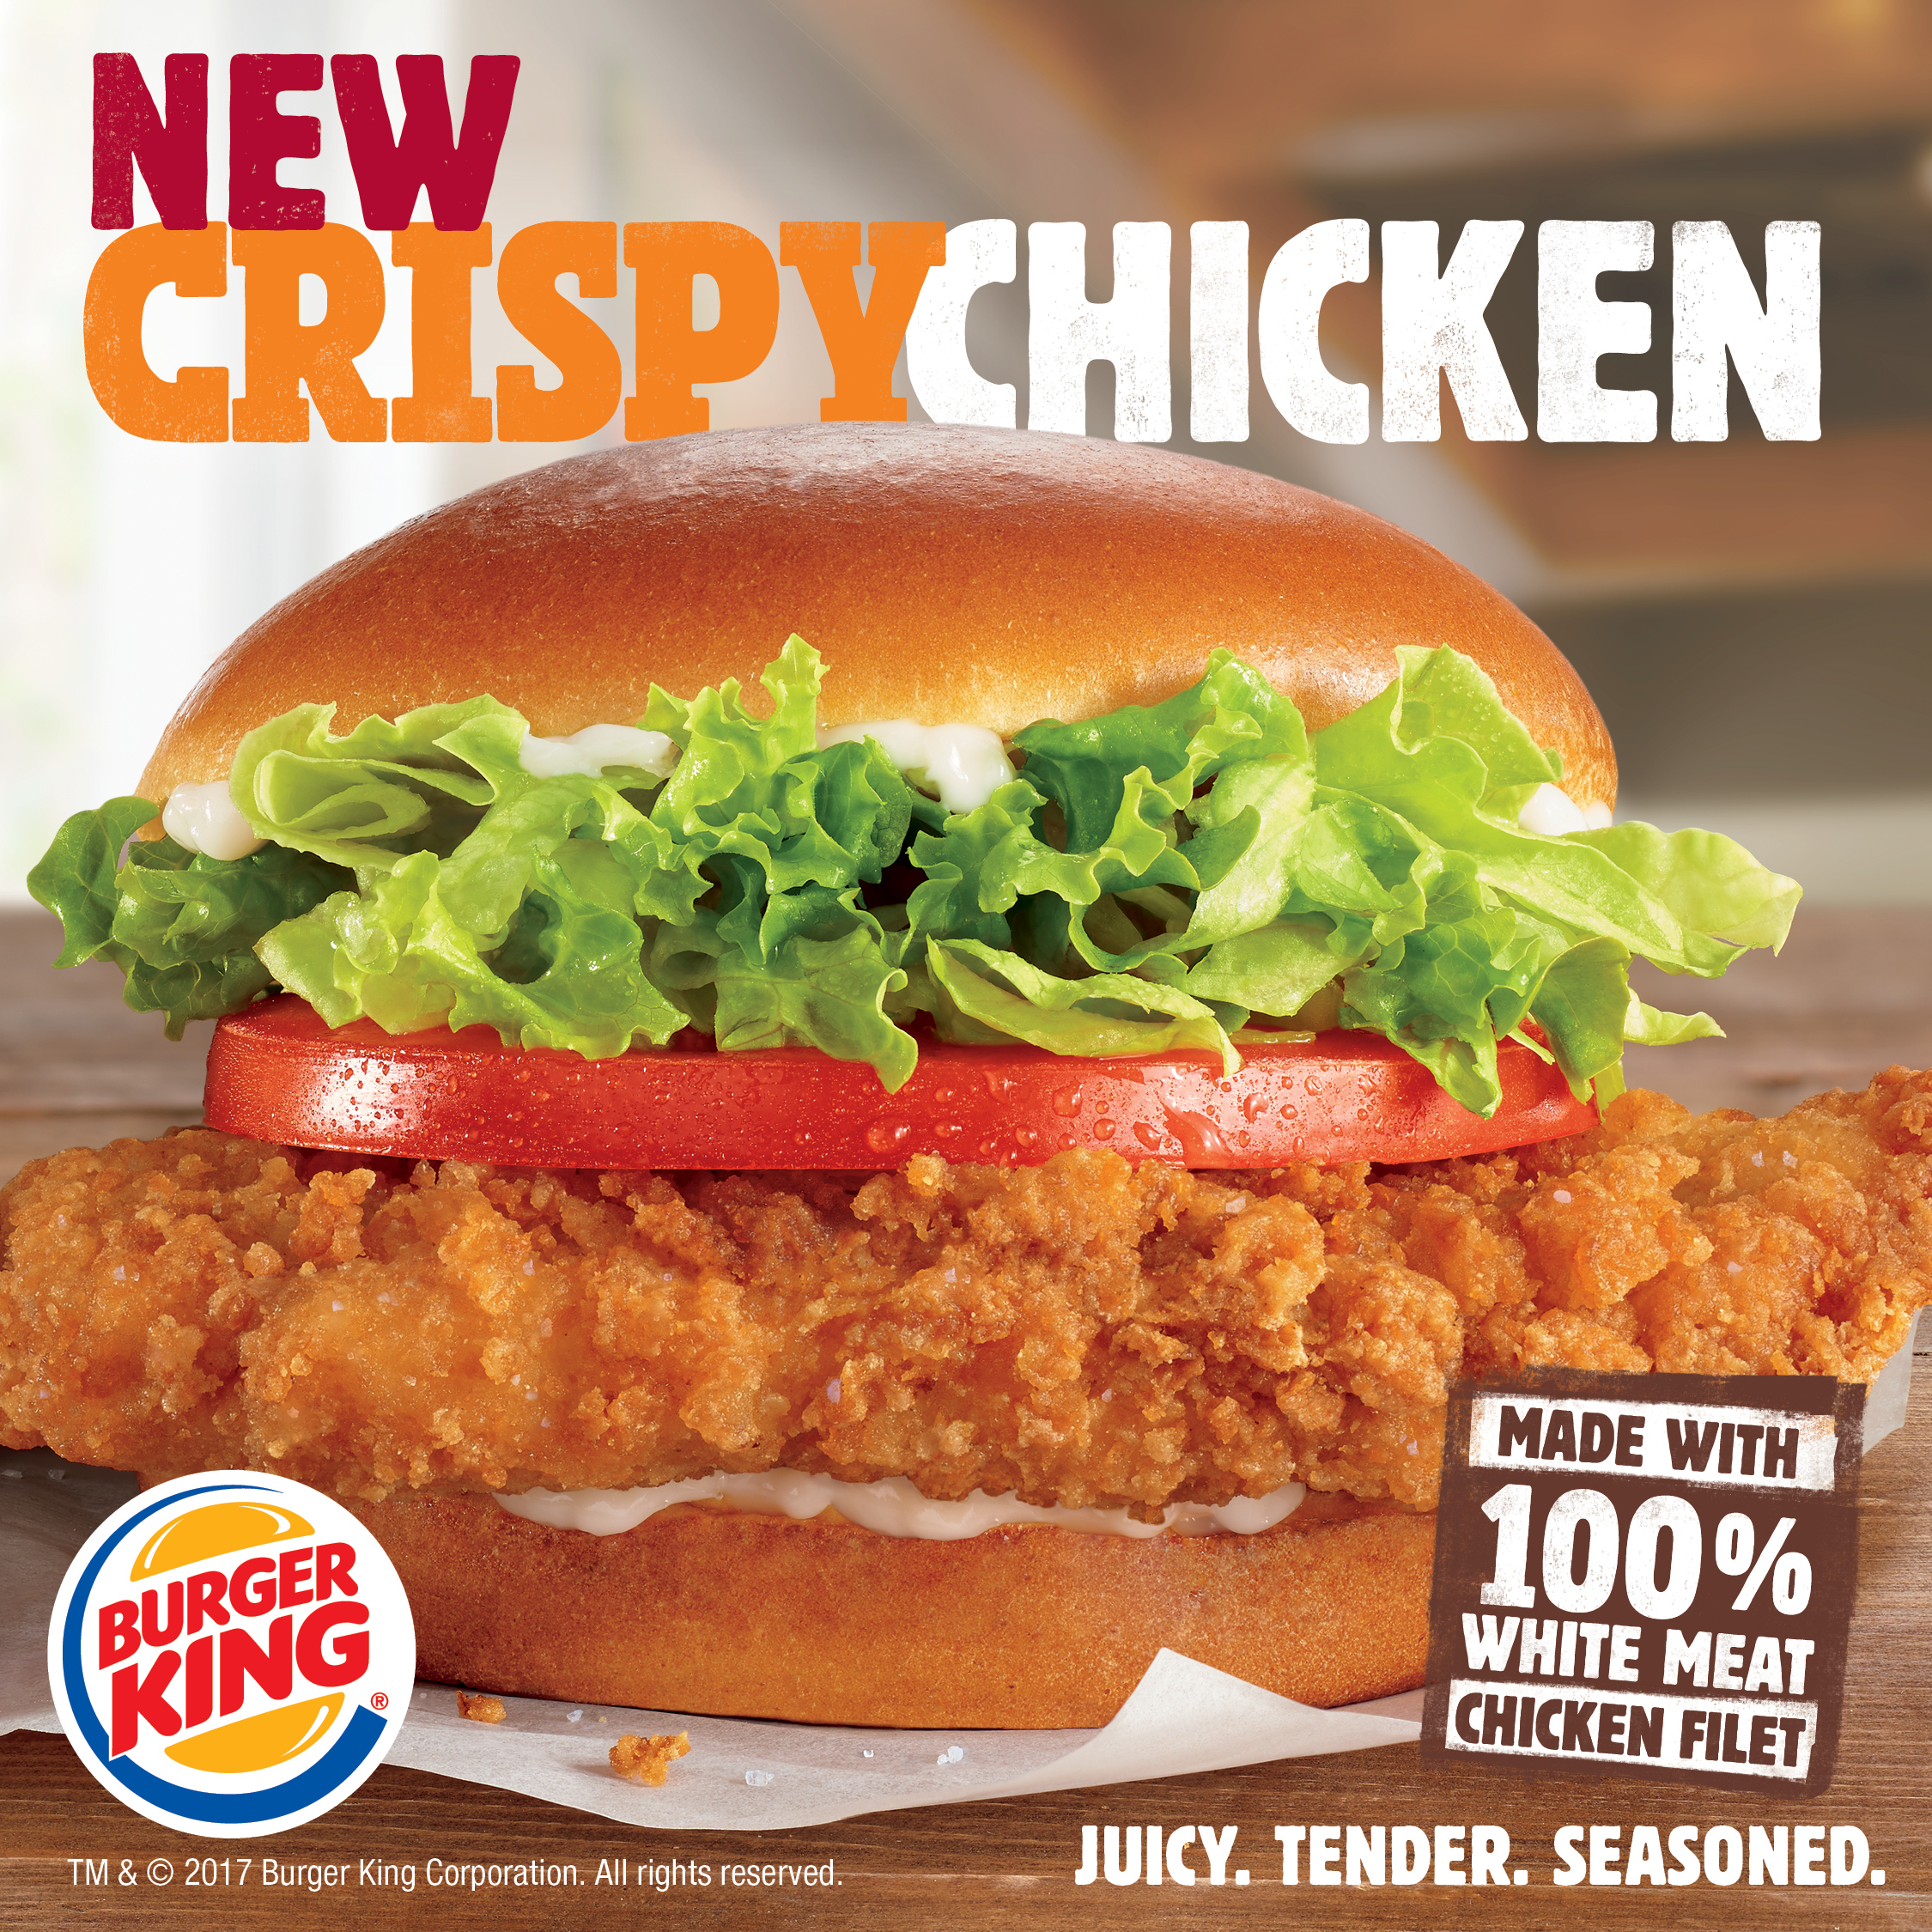 New Crispy Chicken Sandwich Made with Seasoned 100% White Meat Filet